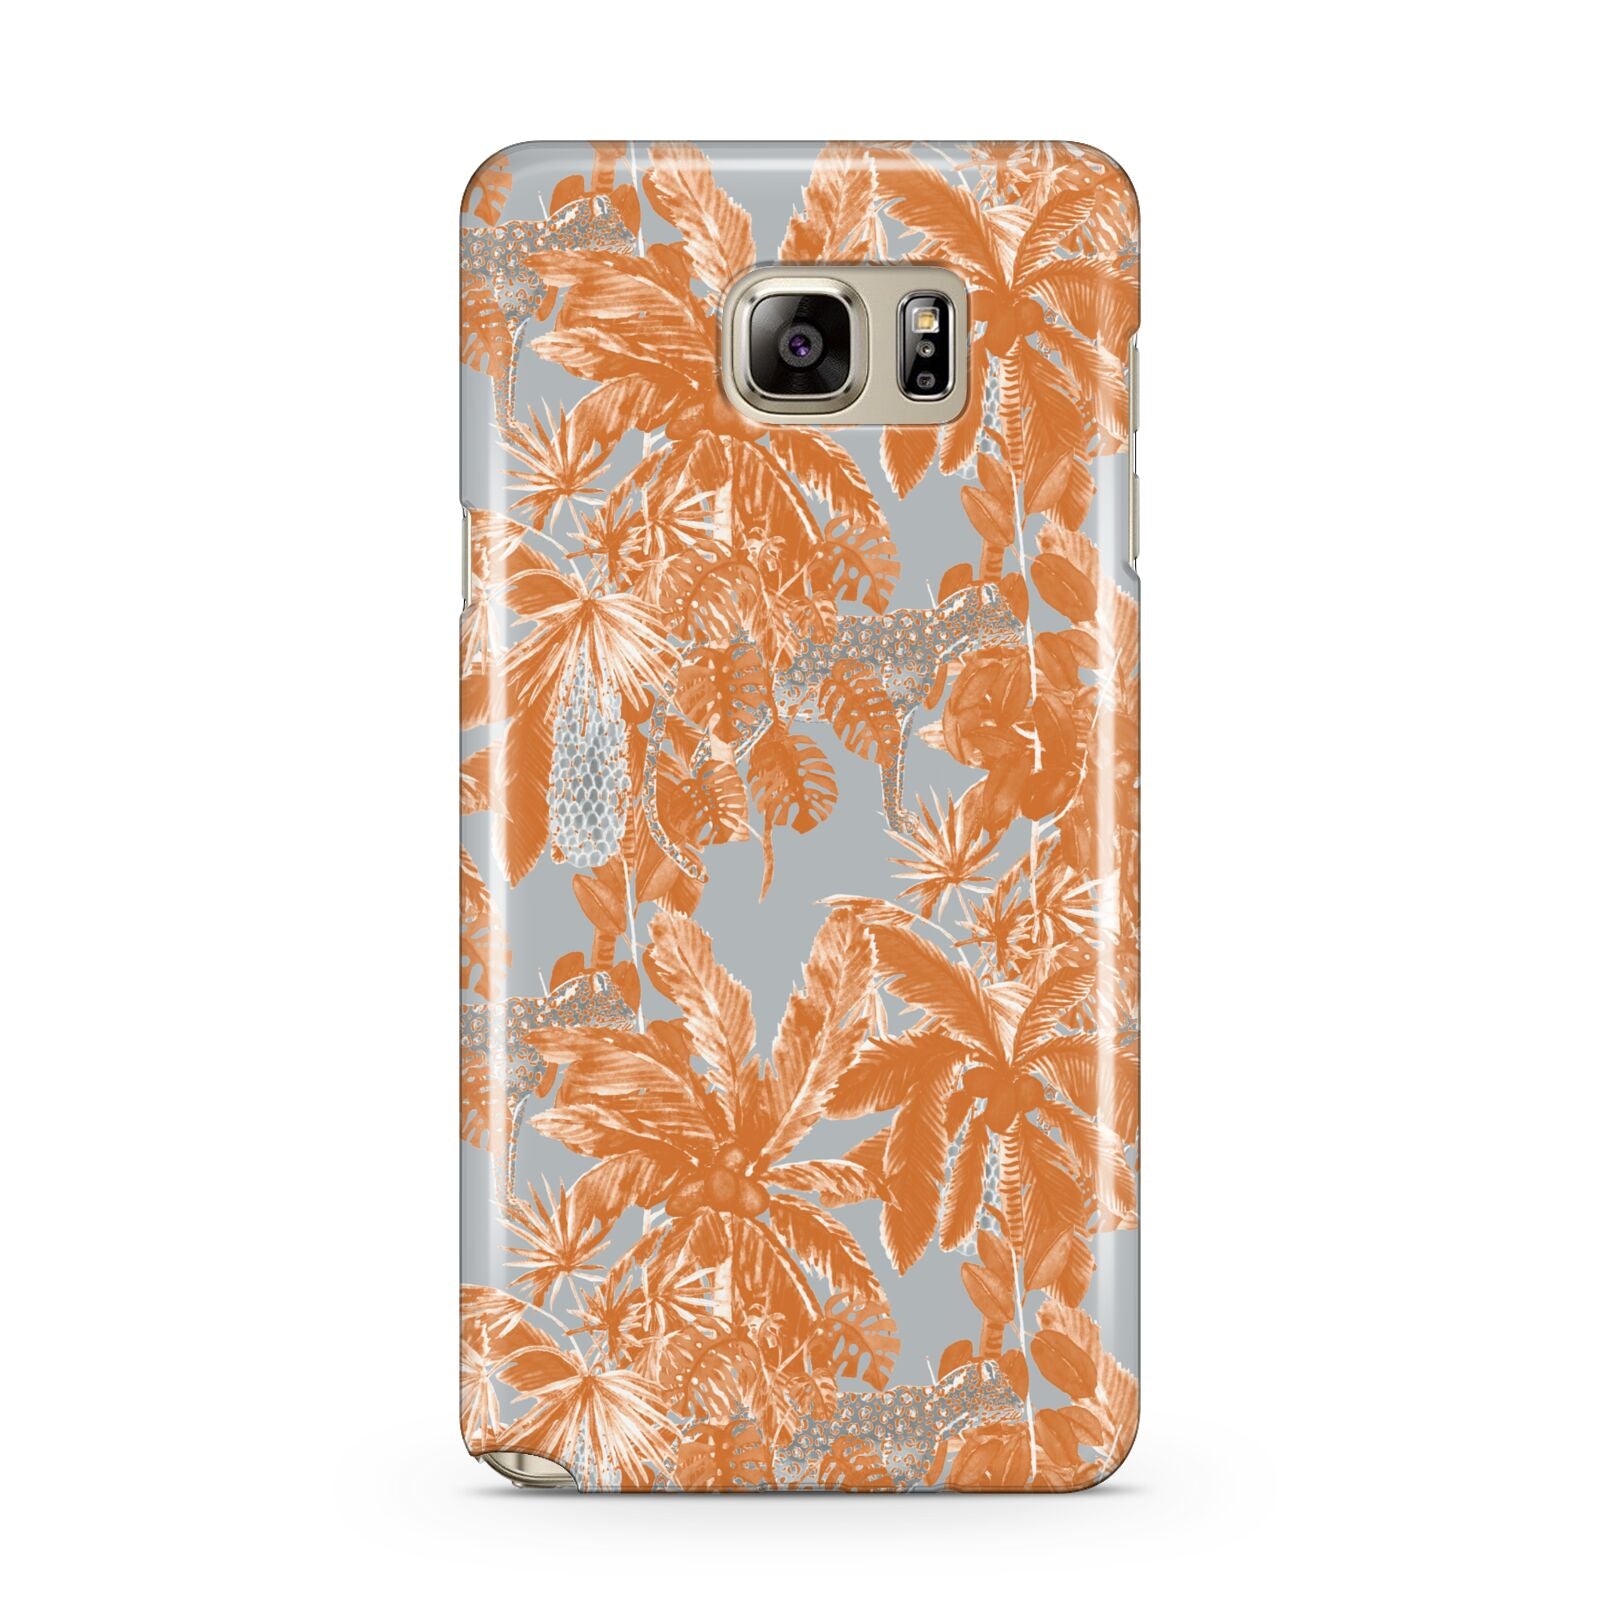 Tropical Samsung Galaxy Note 5 Case